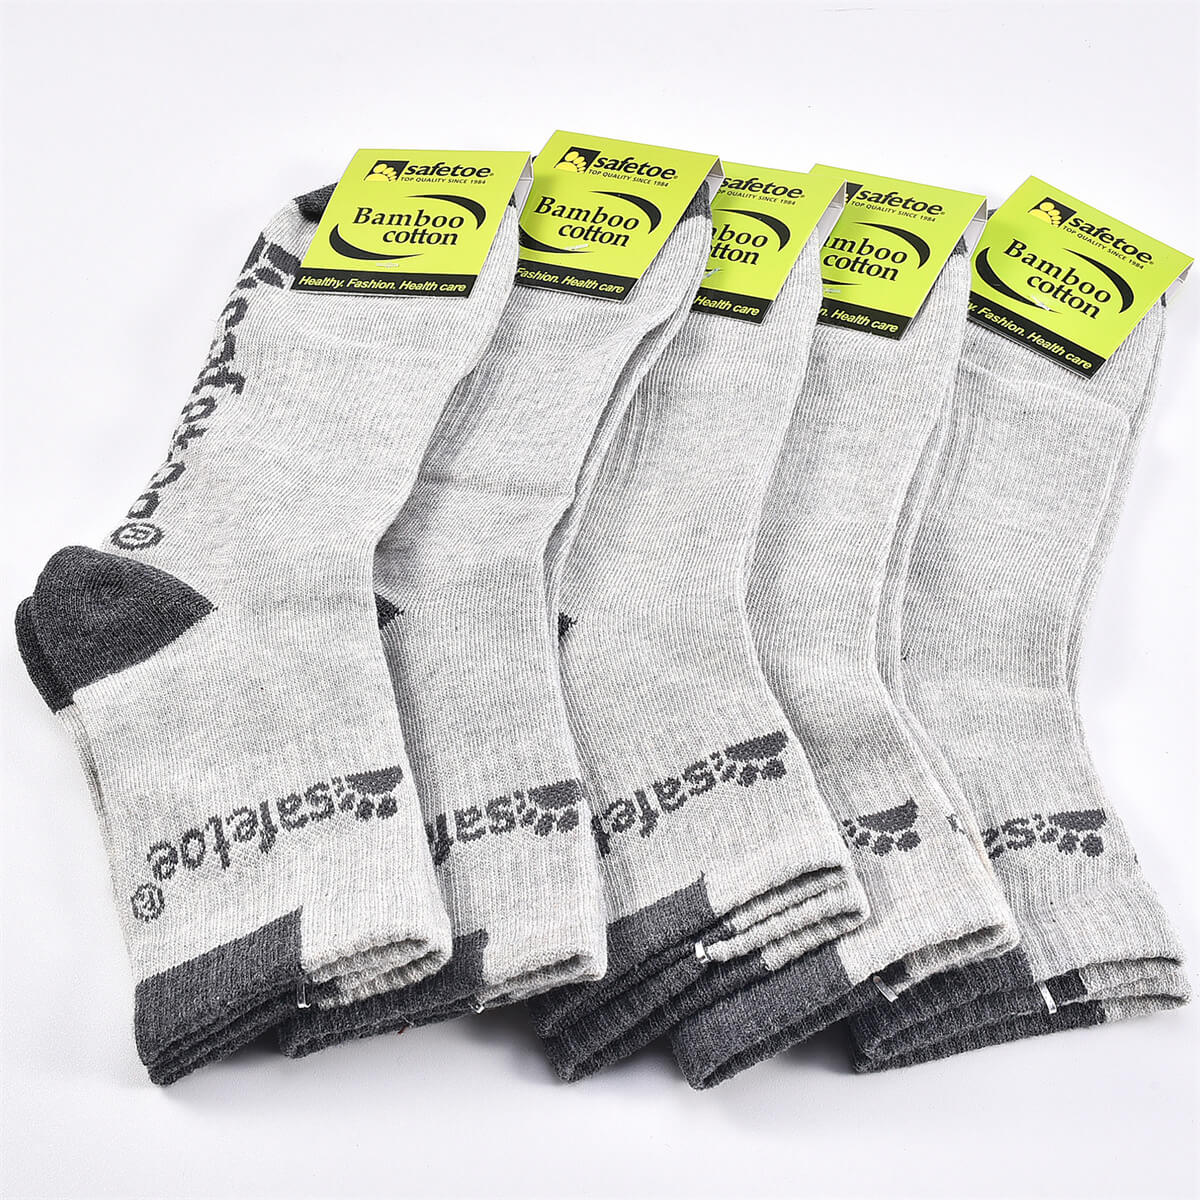 Safetoe 7 Pairs Natural Cotton Socks, Antibacterial Trainer Socks for Men and Women